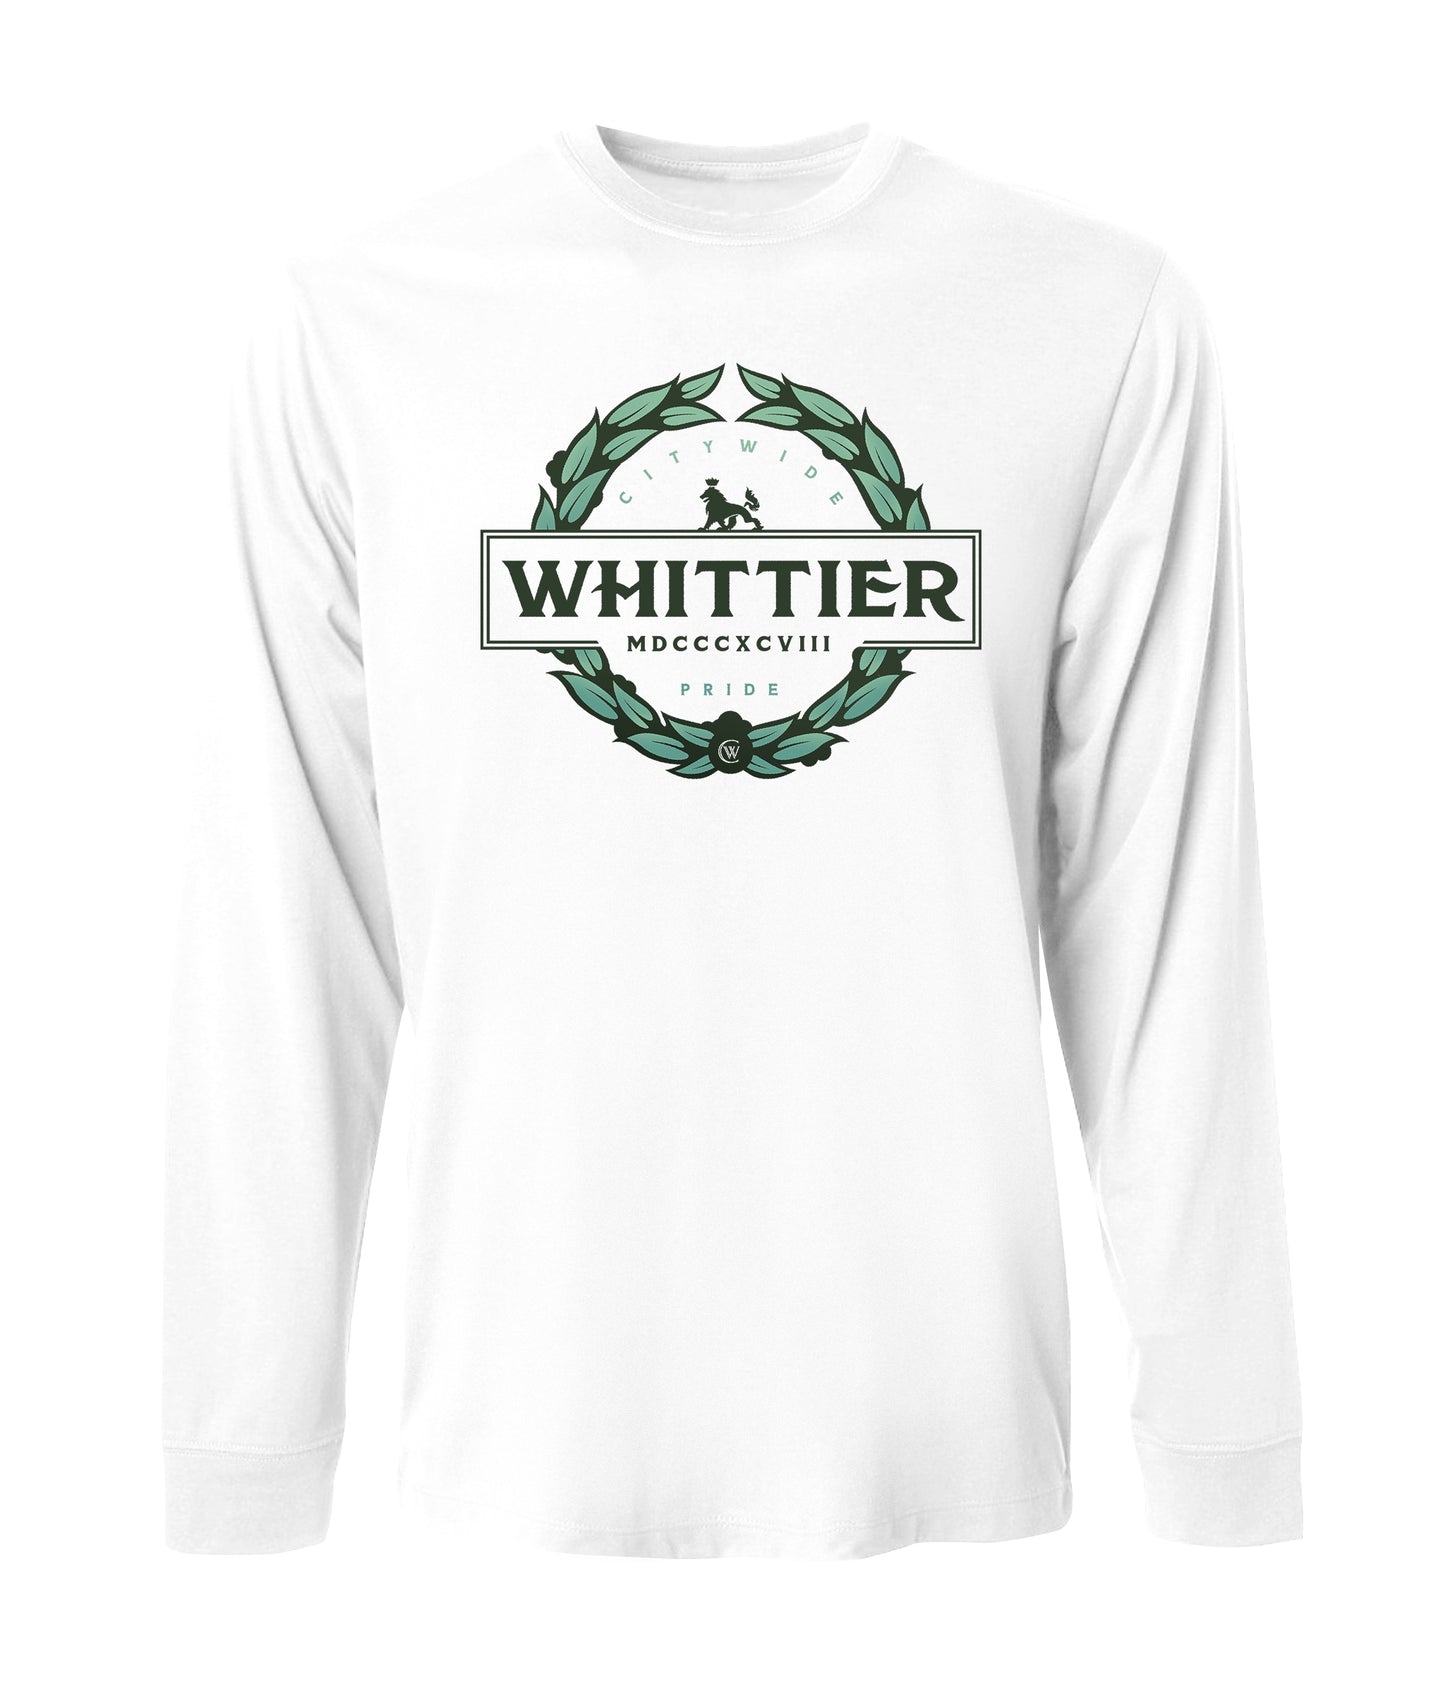 Whittier The Pride Long Sleeve Tee